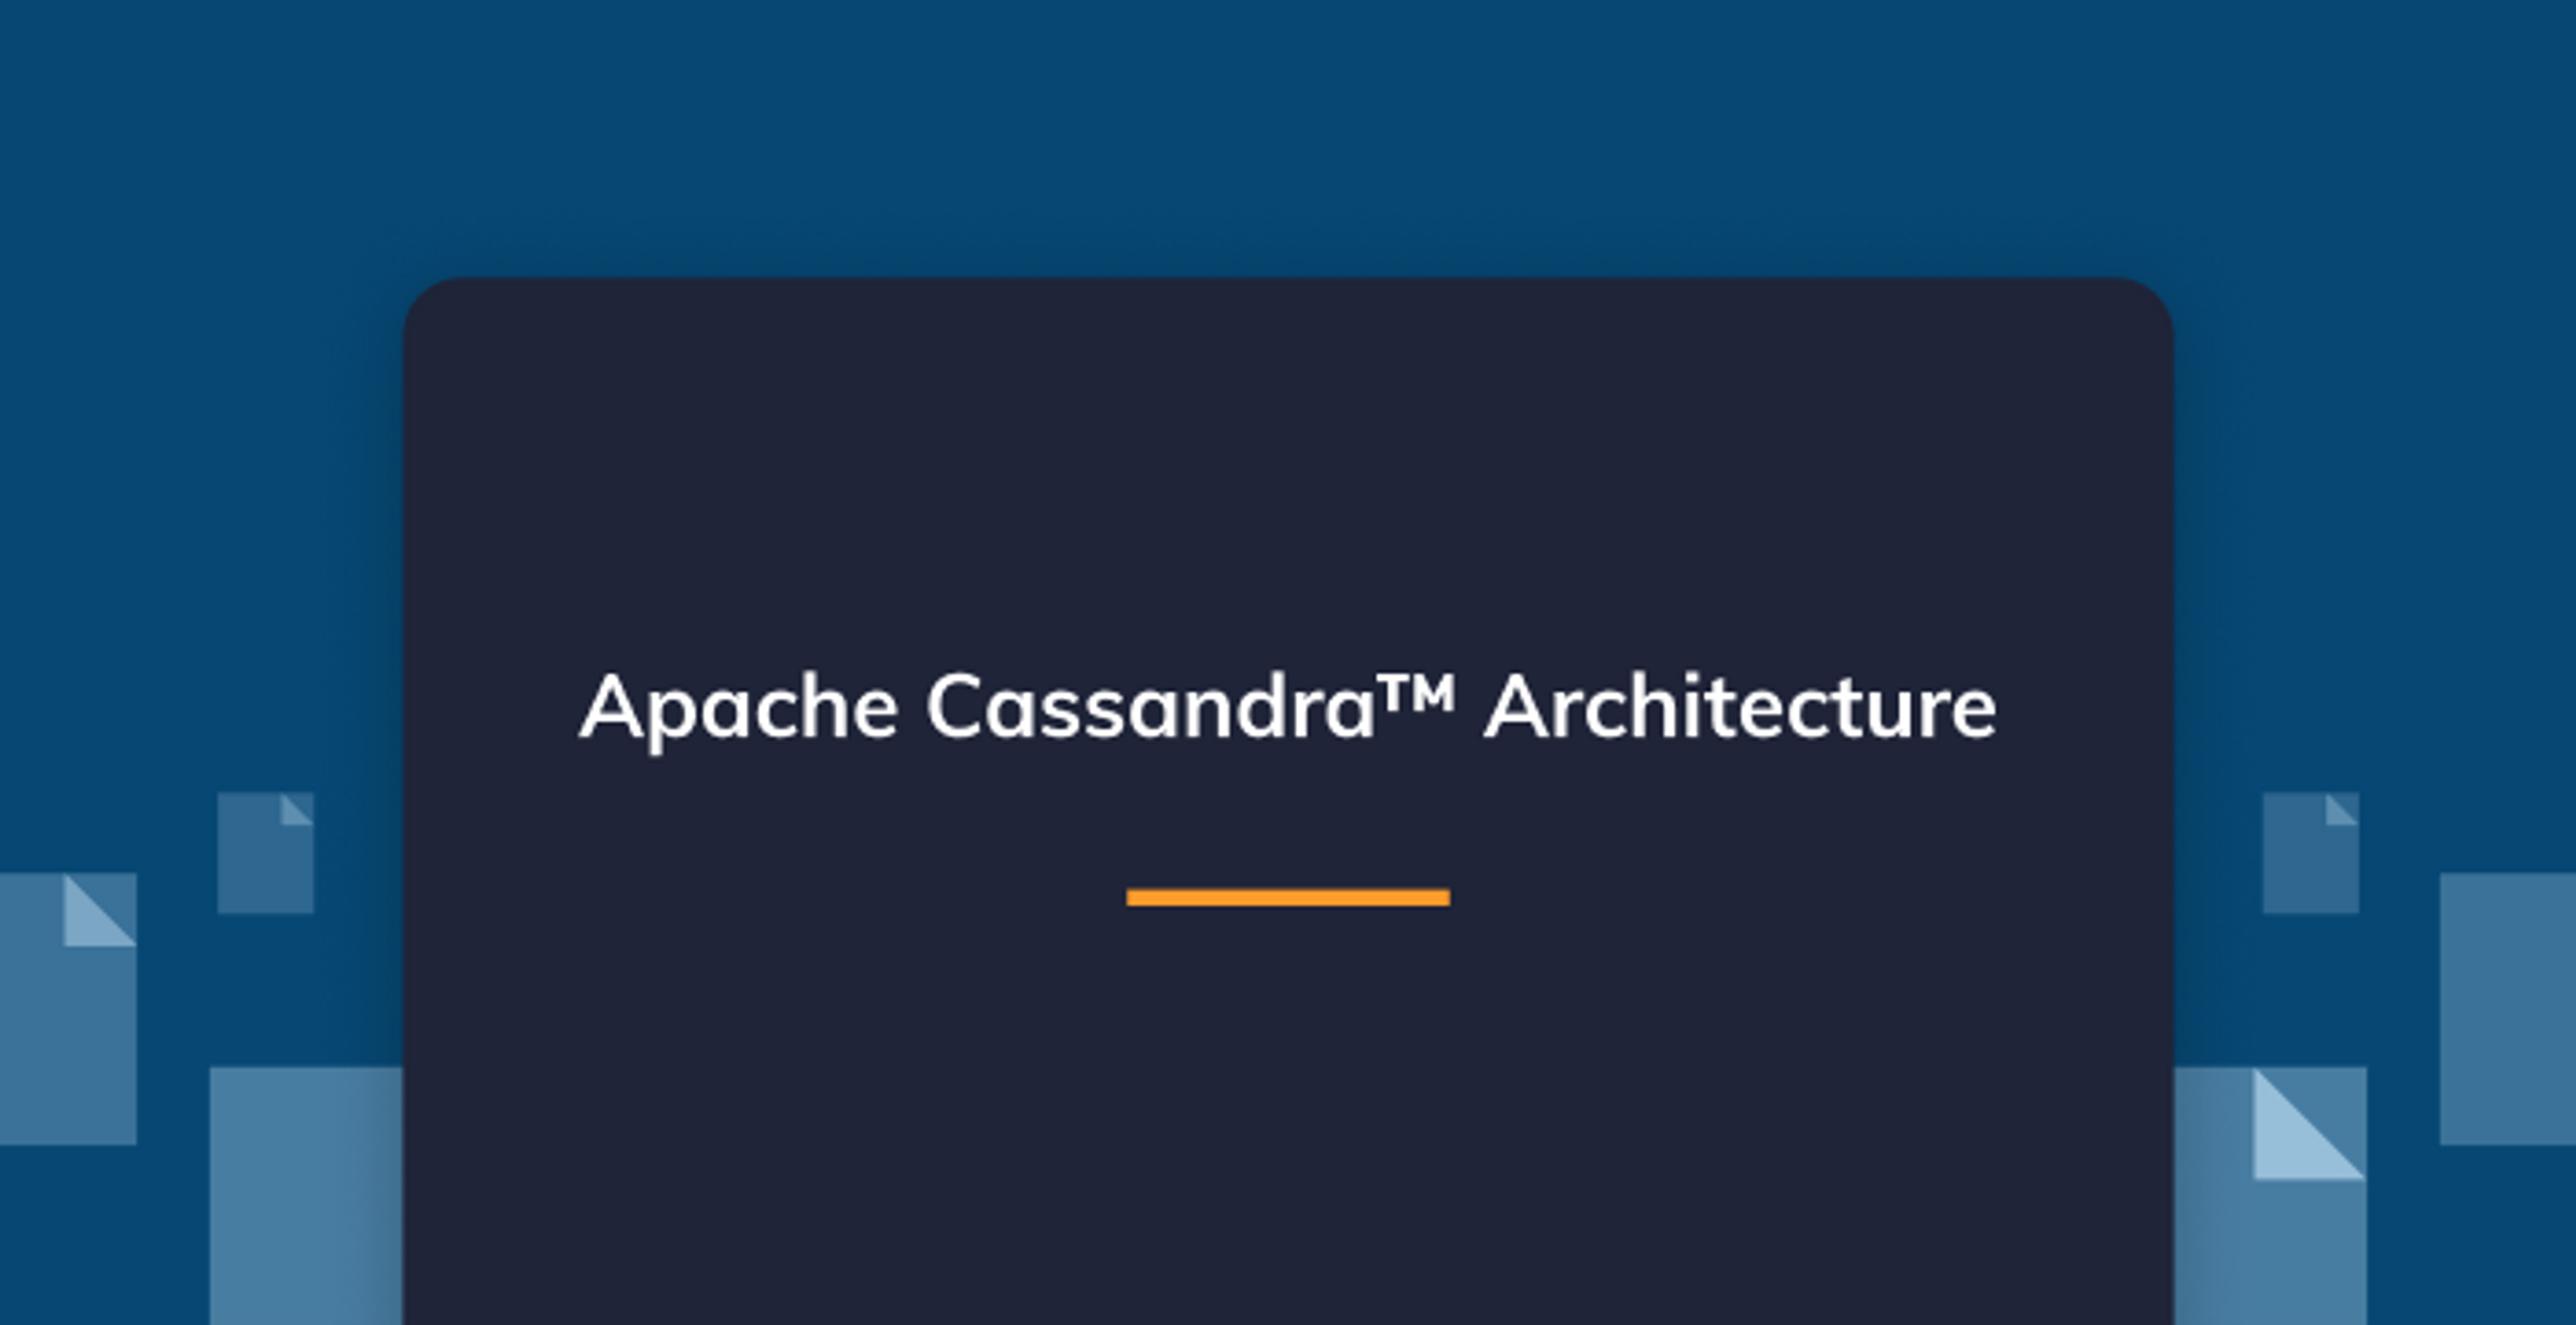 Apache Cassandra™ Architecture